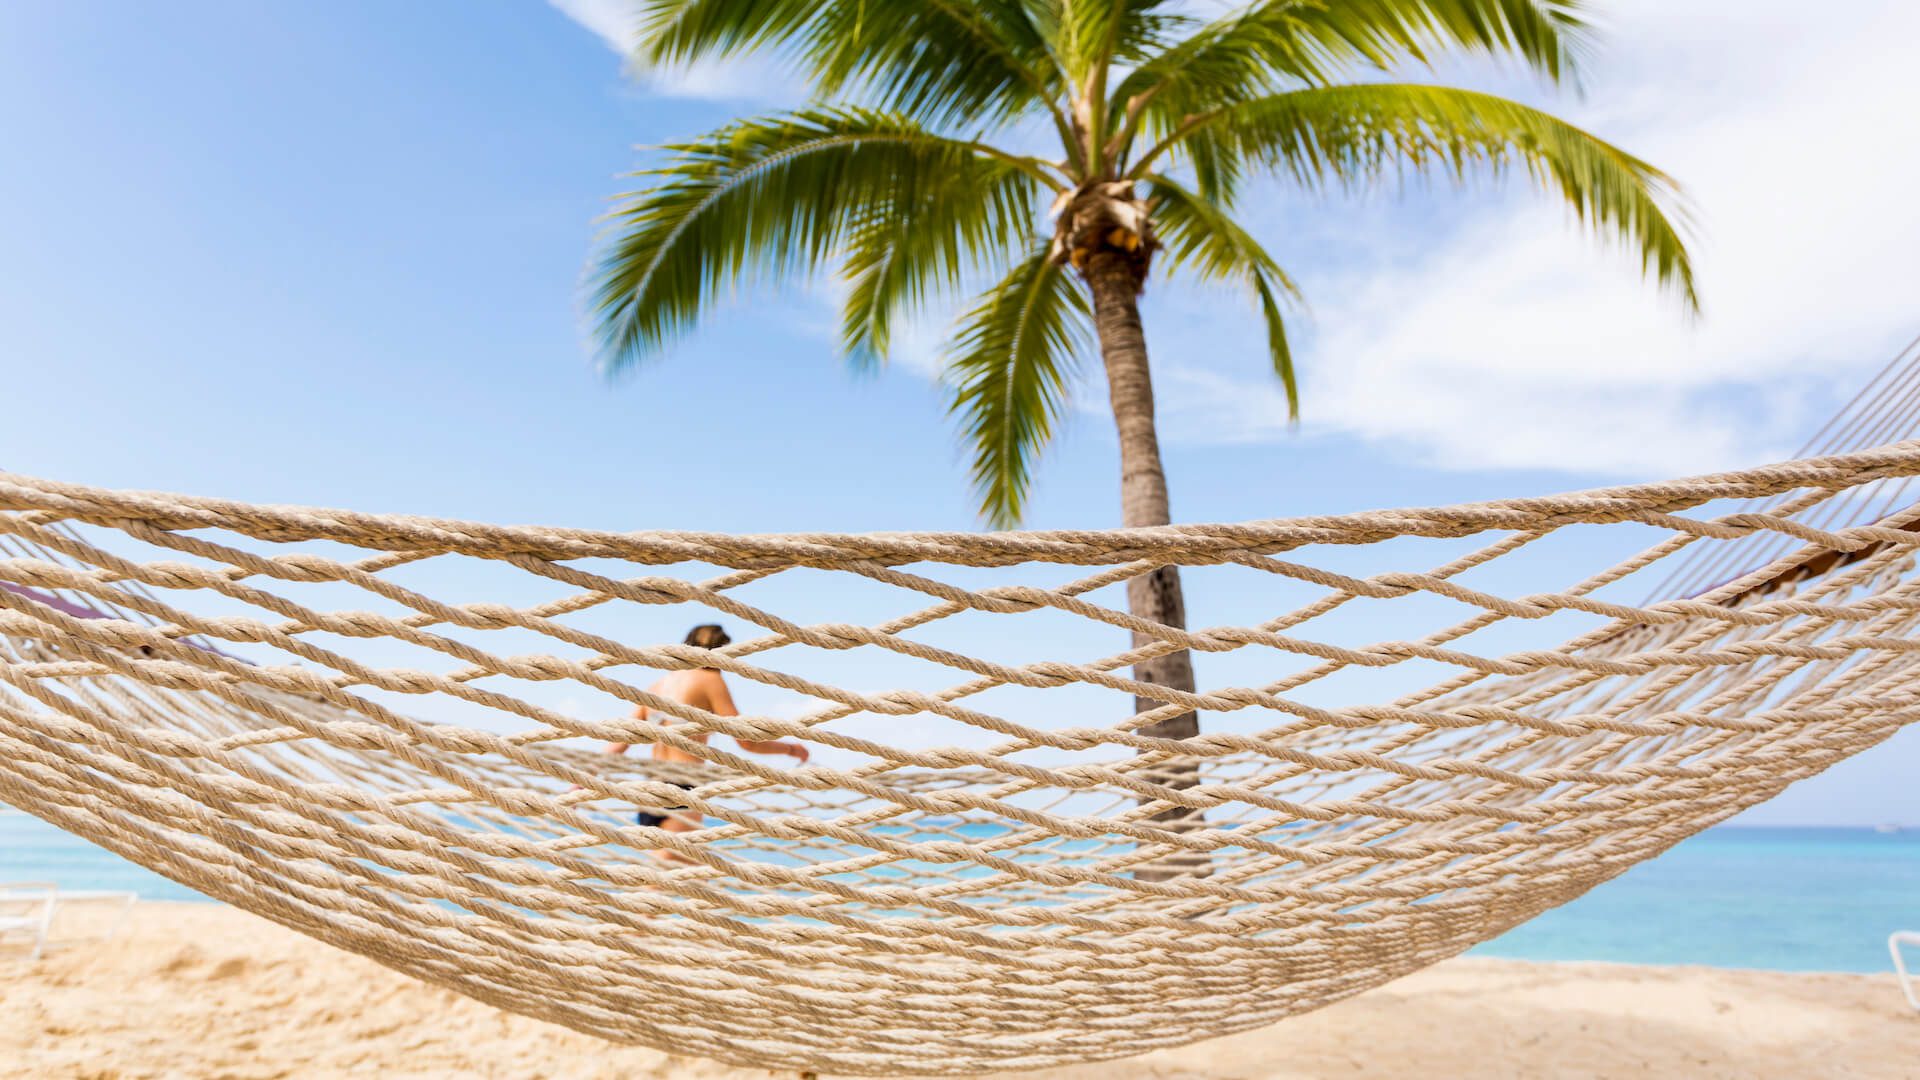 A hammock on the beach with palm tree